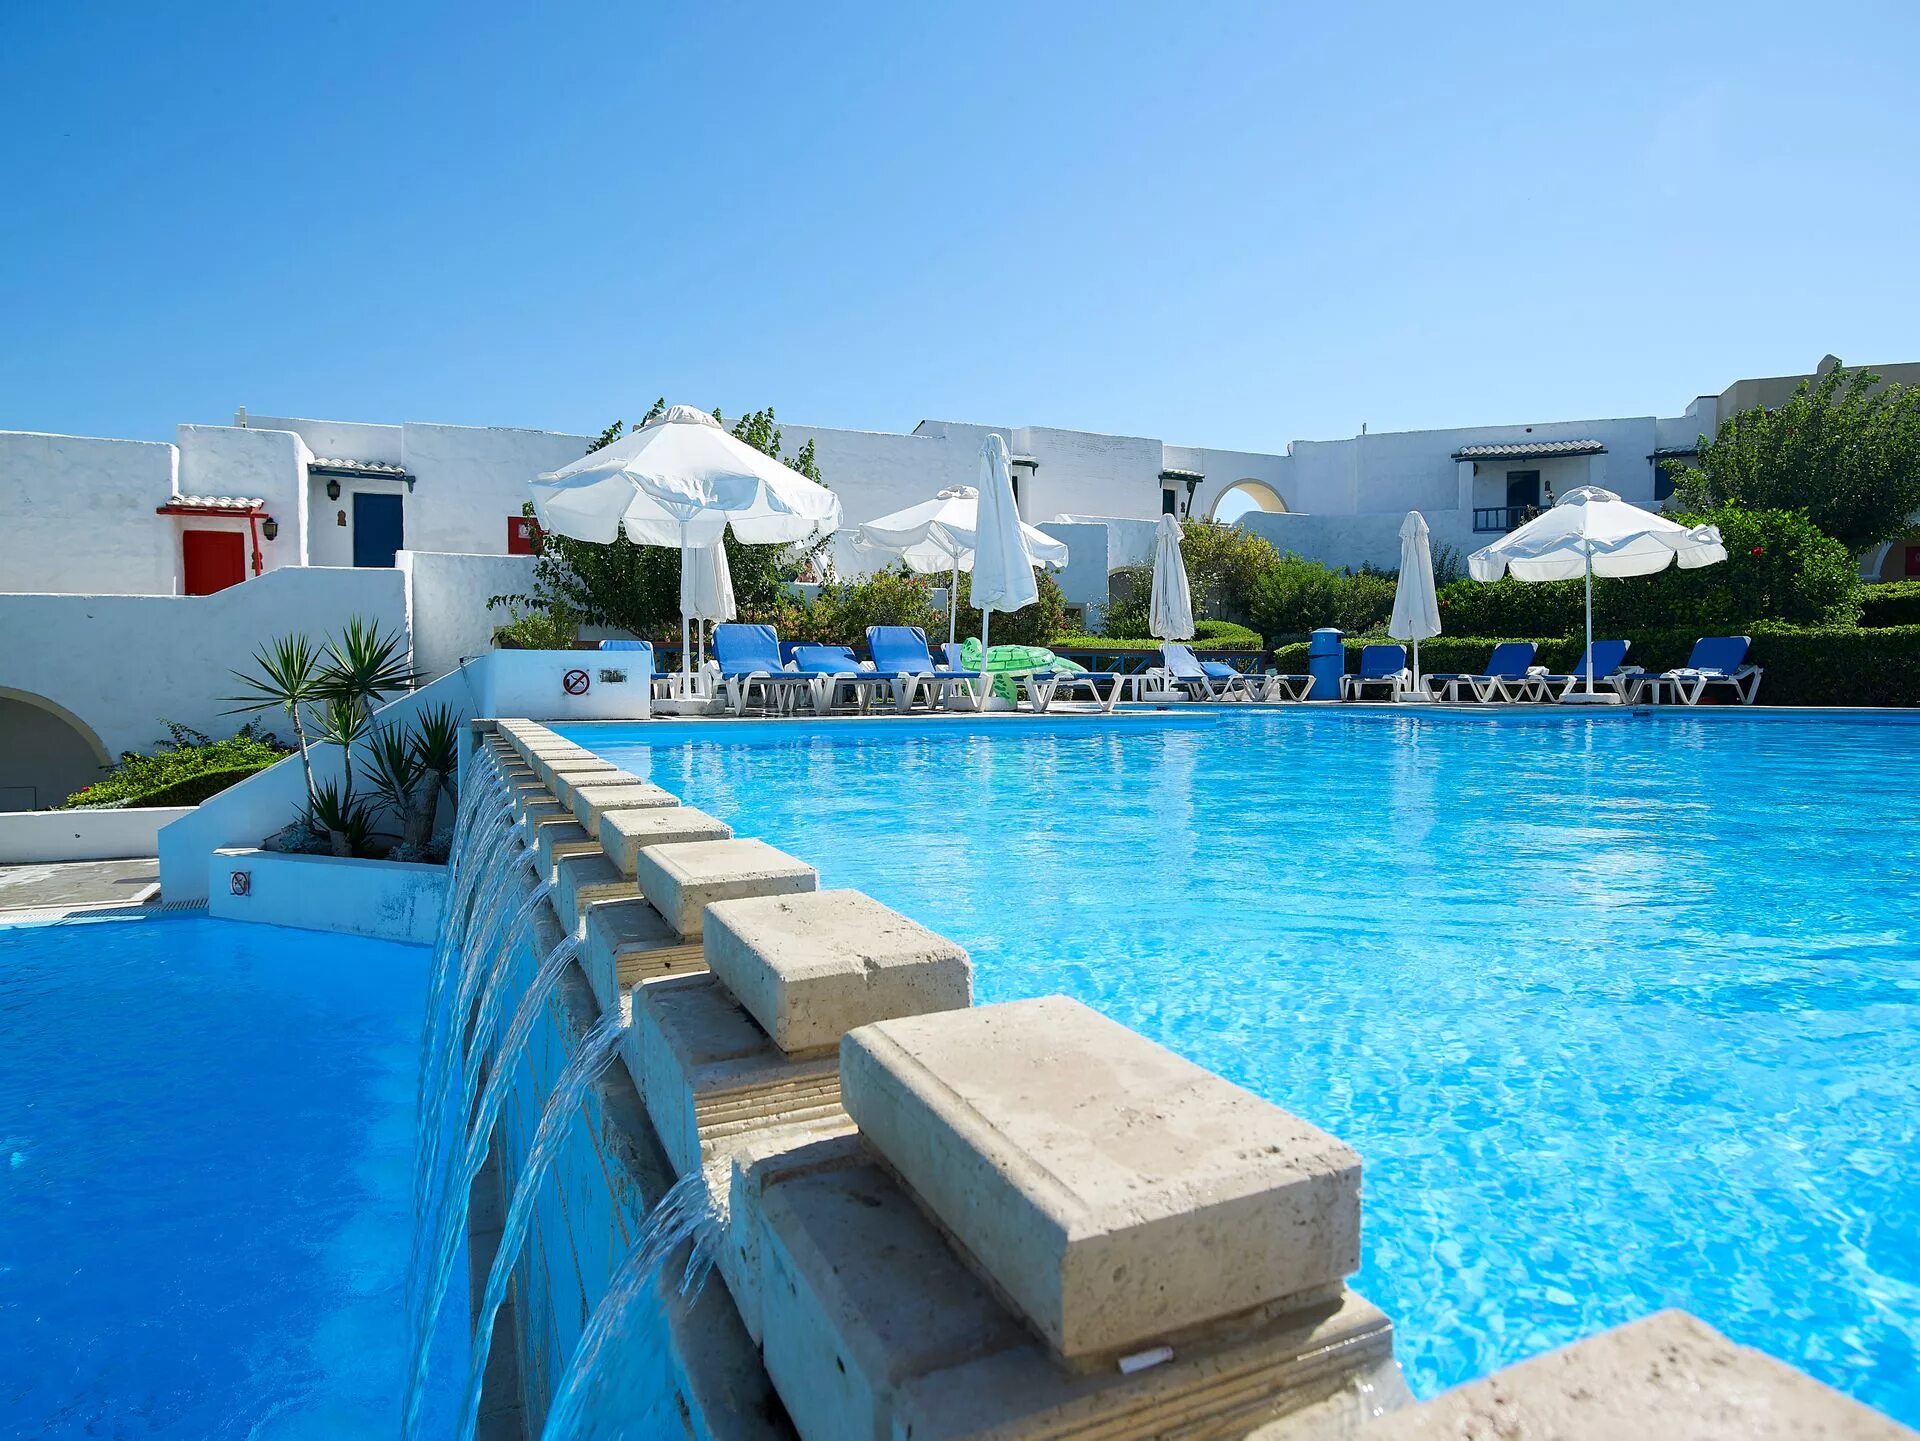 Beach hotel village. Греция Крит Aldemar Cretan Village. Альдемар Кретан Вилладж 4. Aldemar отель Крит. Aldemar Cretan Village Beach Resort 4+ *.